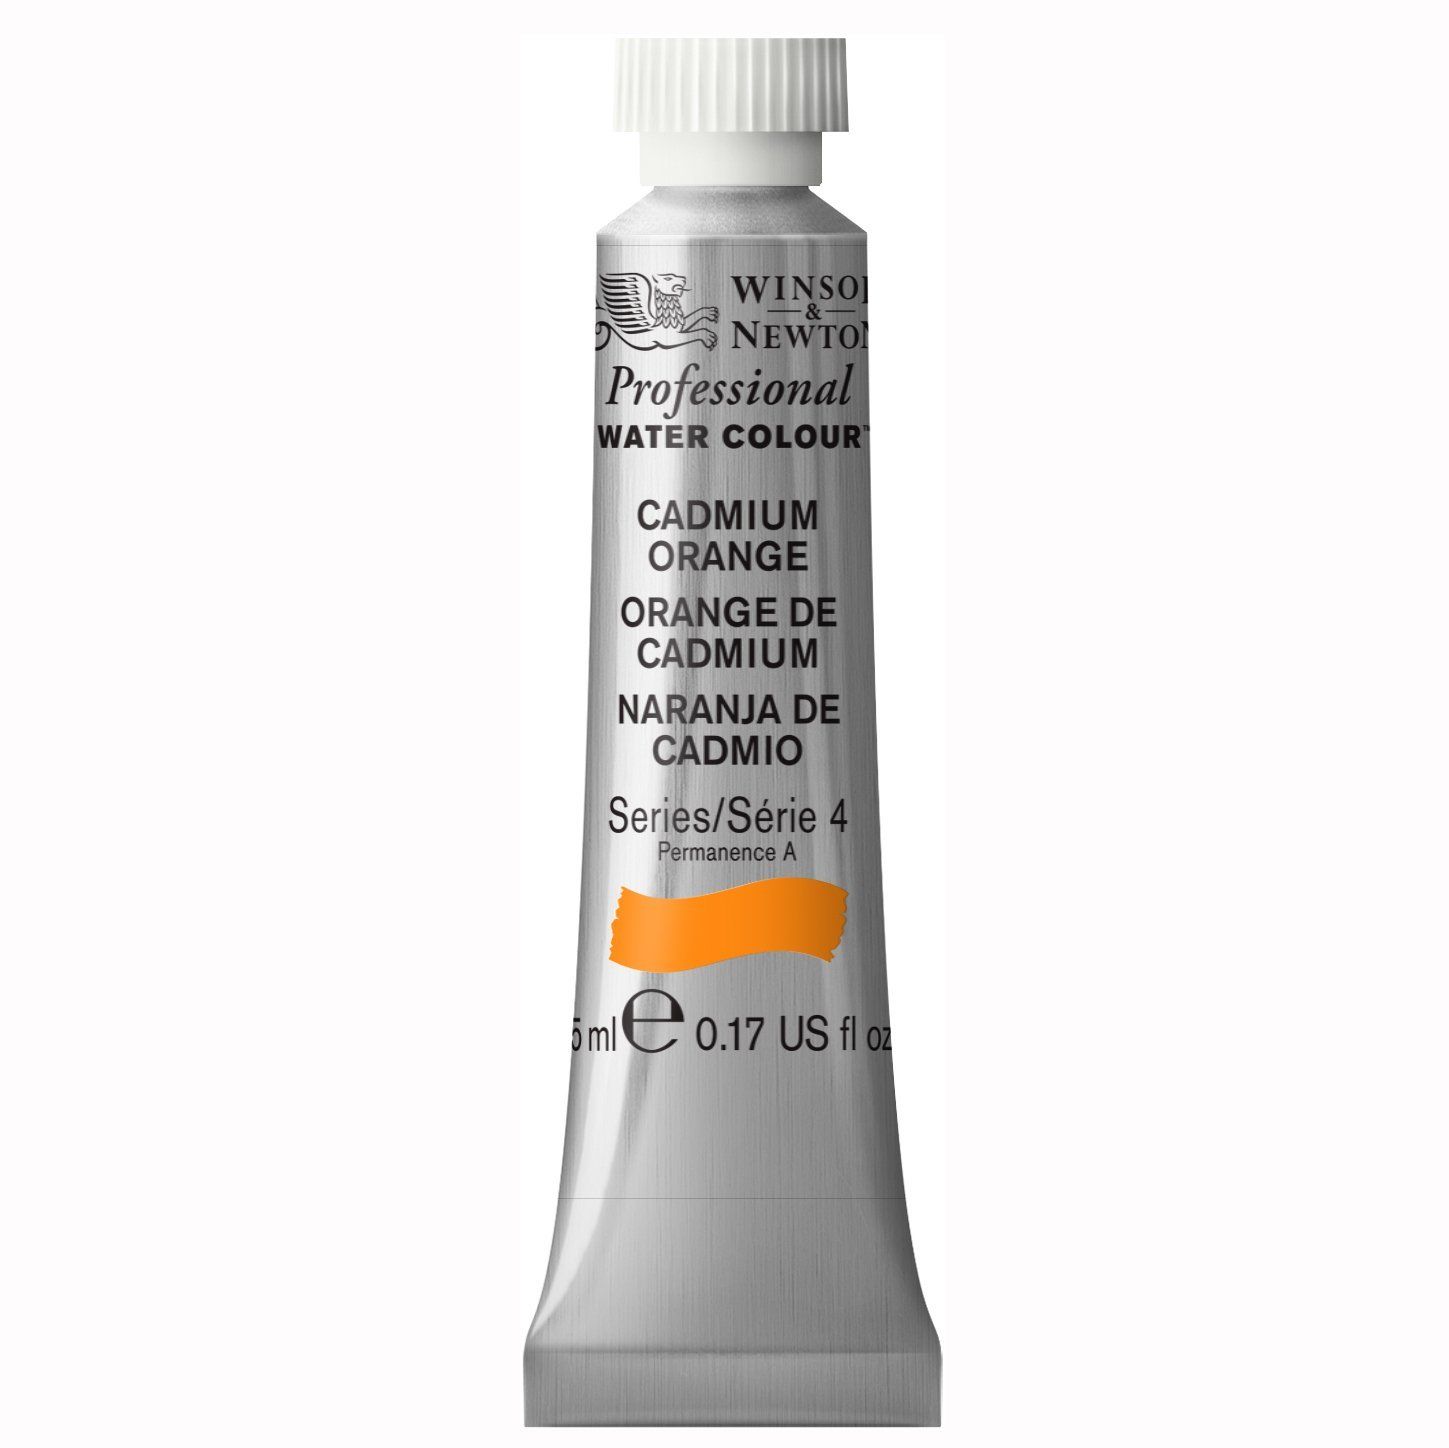 Winsor & Newton Watercolour Paint - Cadmium Orange 5ml